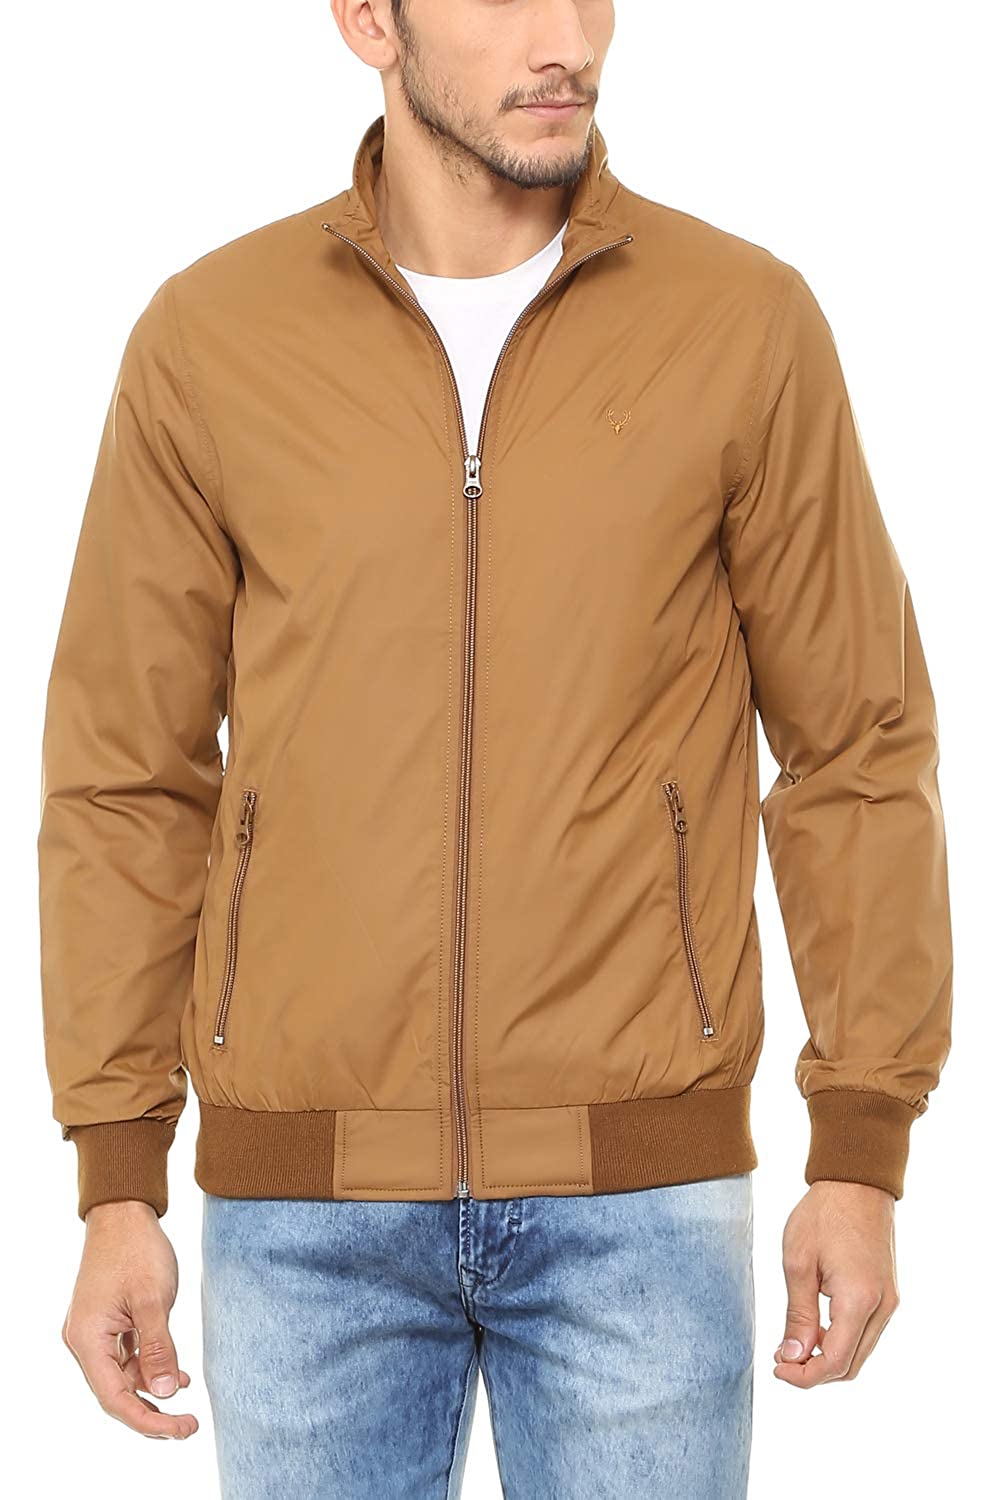 Allen Solly Men's Jacket : Loot Deal | shopping offers